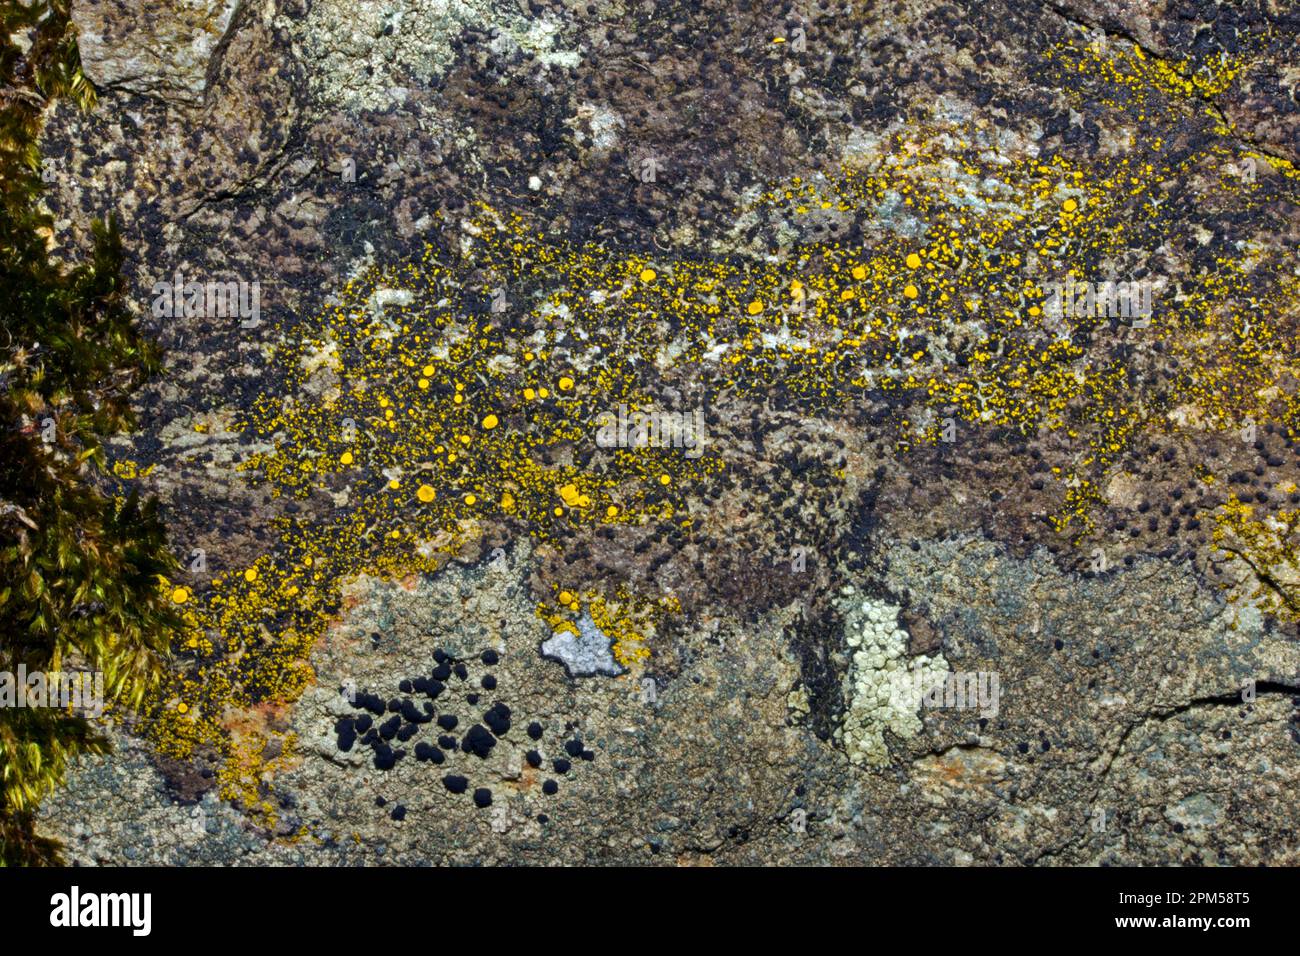 Candelariella aurella (eggyolk lichen) is a crustose lichen found on calcareous rock and wood. It has a global distribution. Stock Photo